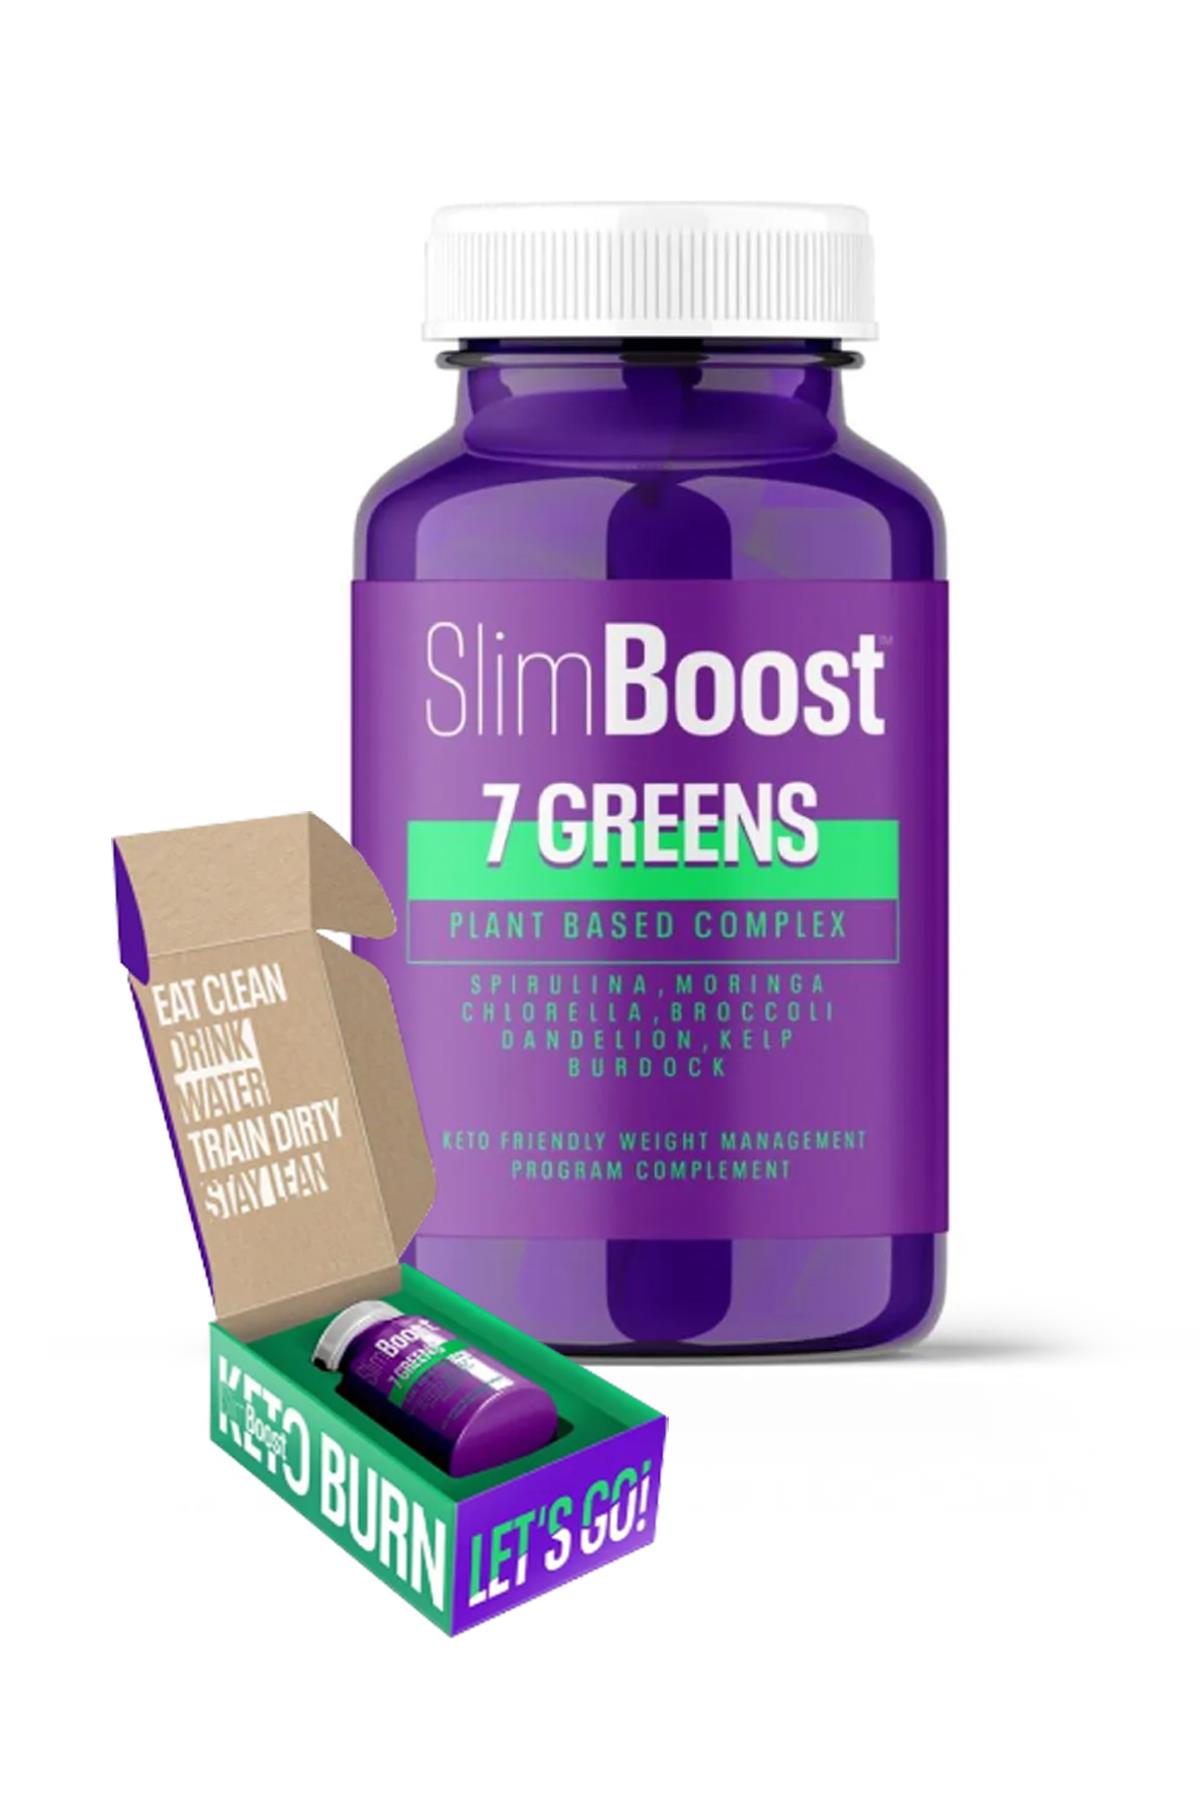 Slim Boost 7 Greens Plant Based Complex Spirulina Moringa Detox Keto  Friendly Slimboost